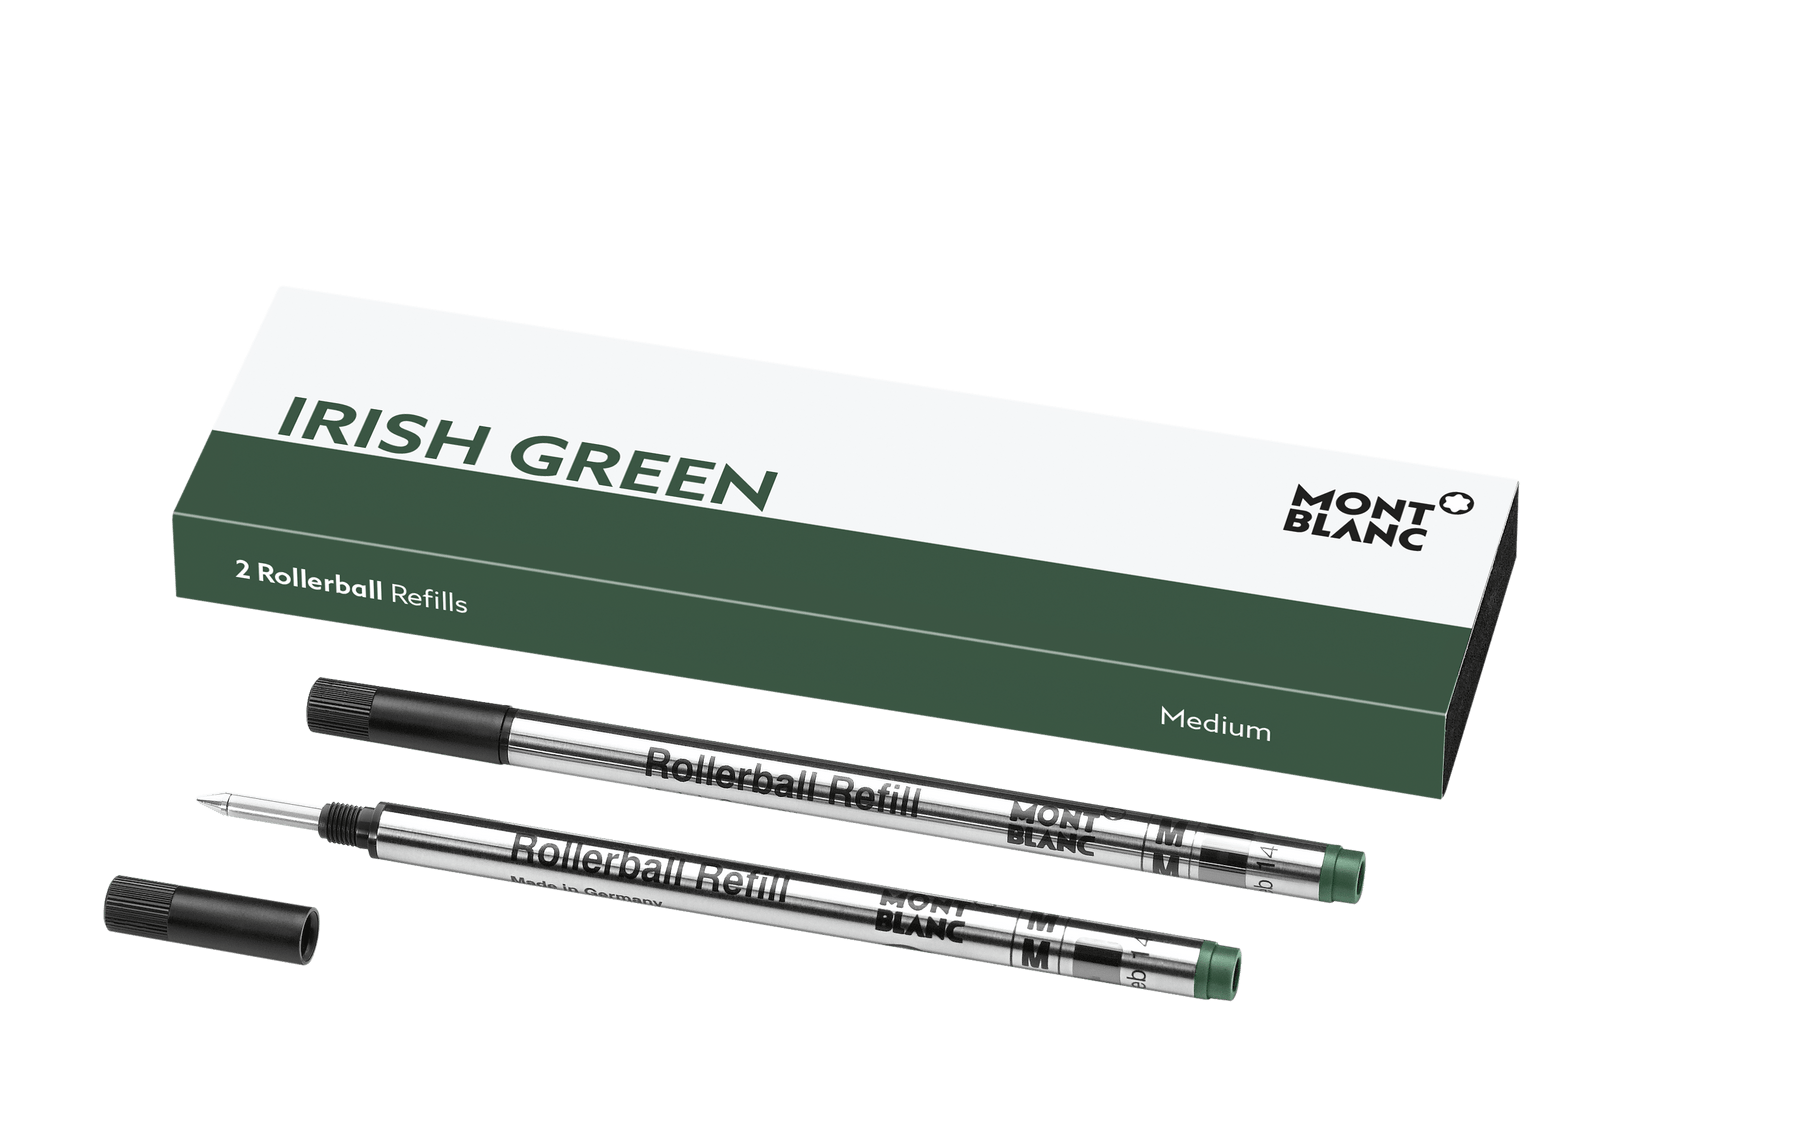 2 Rollerball Refills Medium, Irish Green